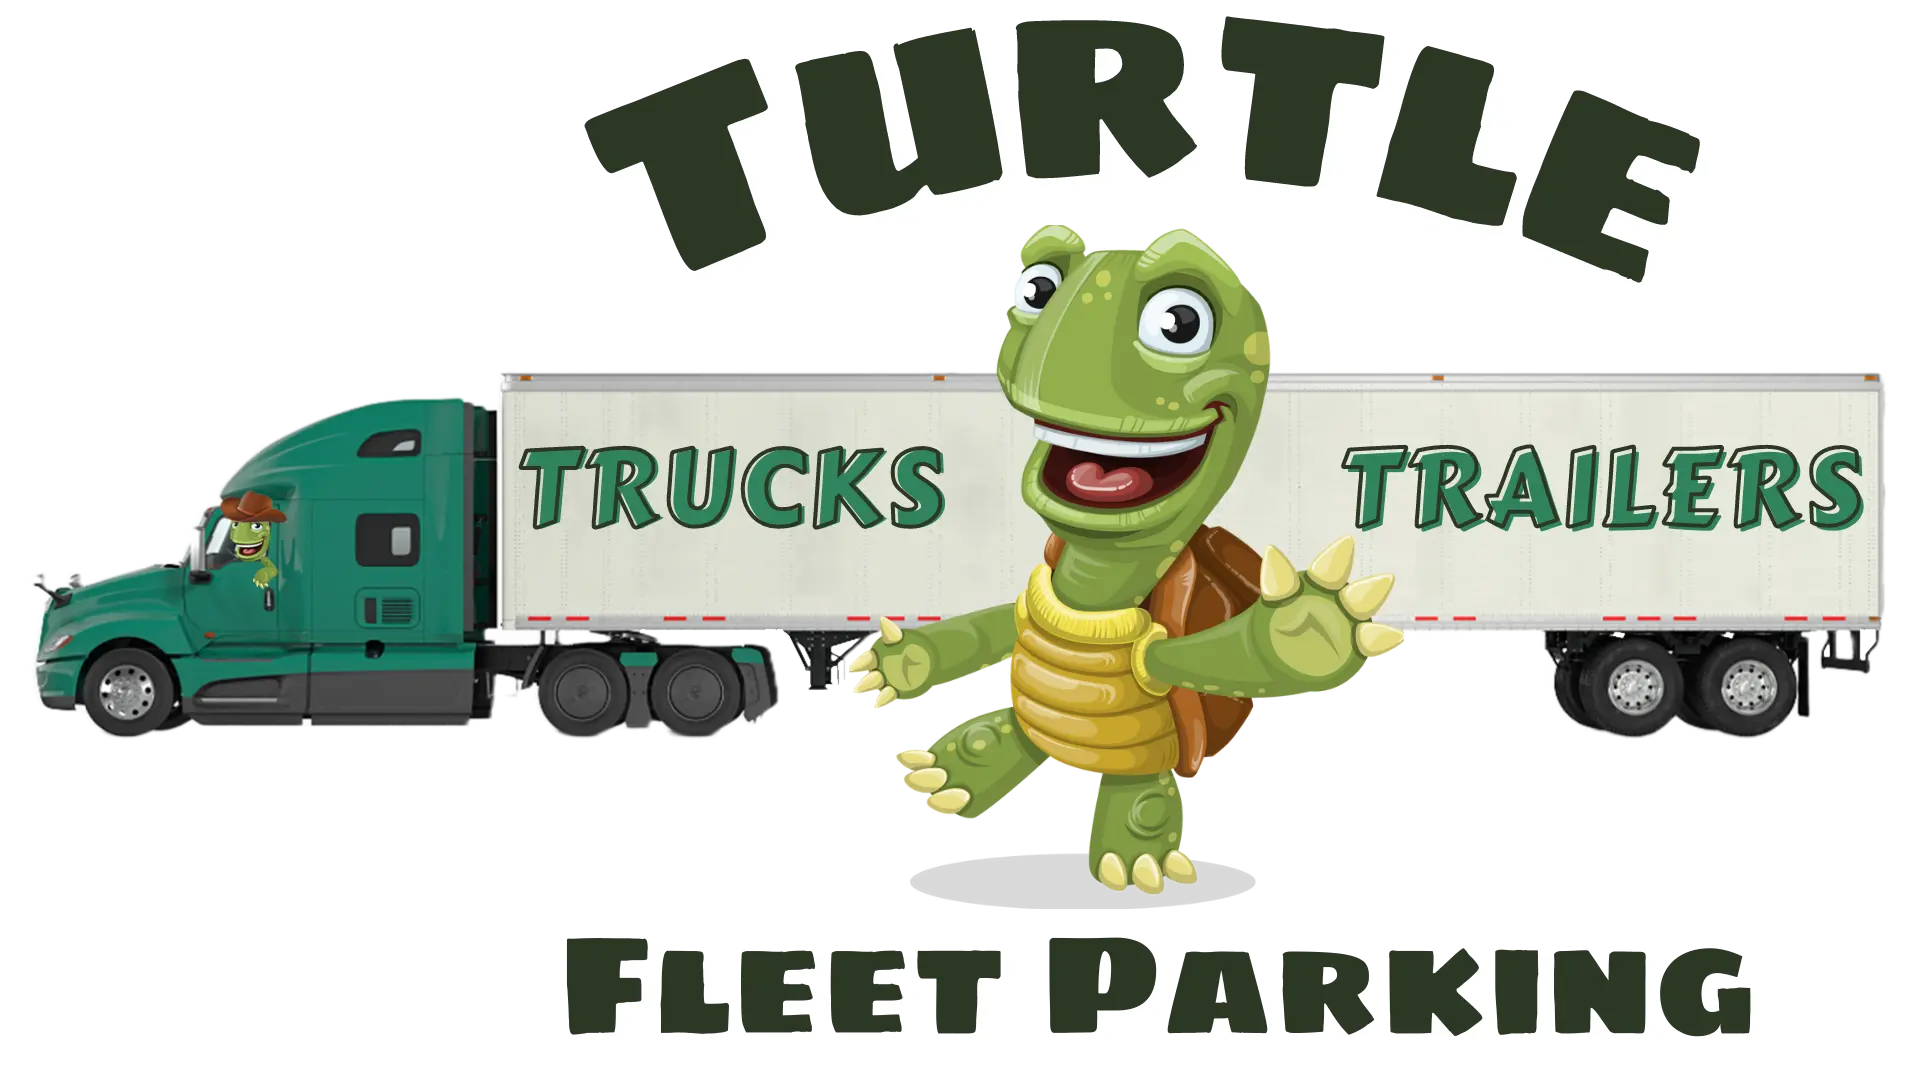 turtle truck and trailer fleet parking